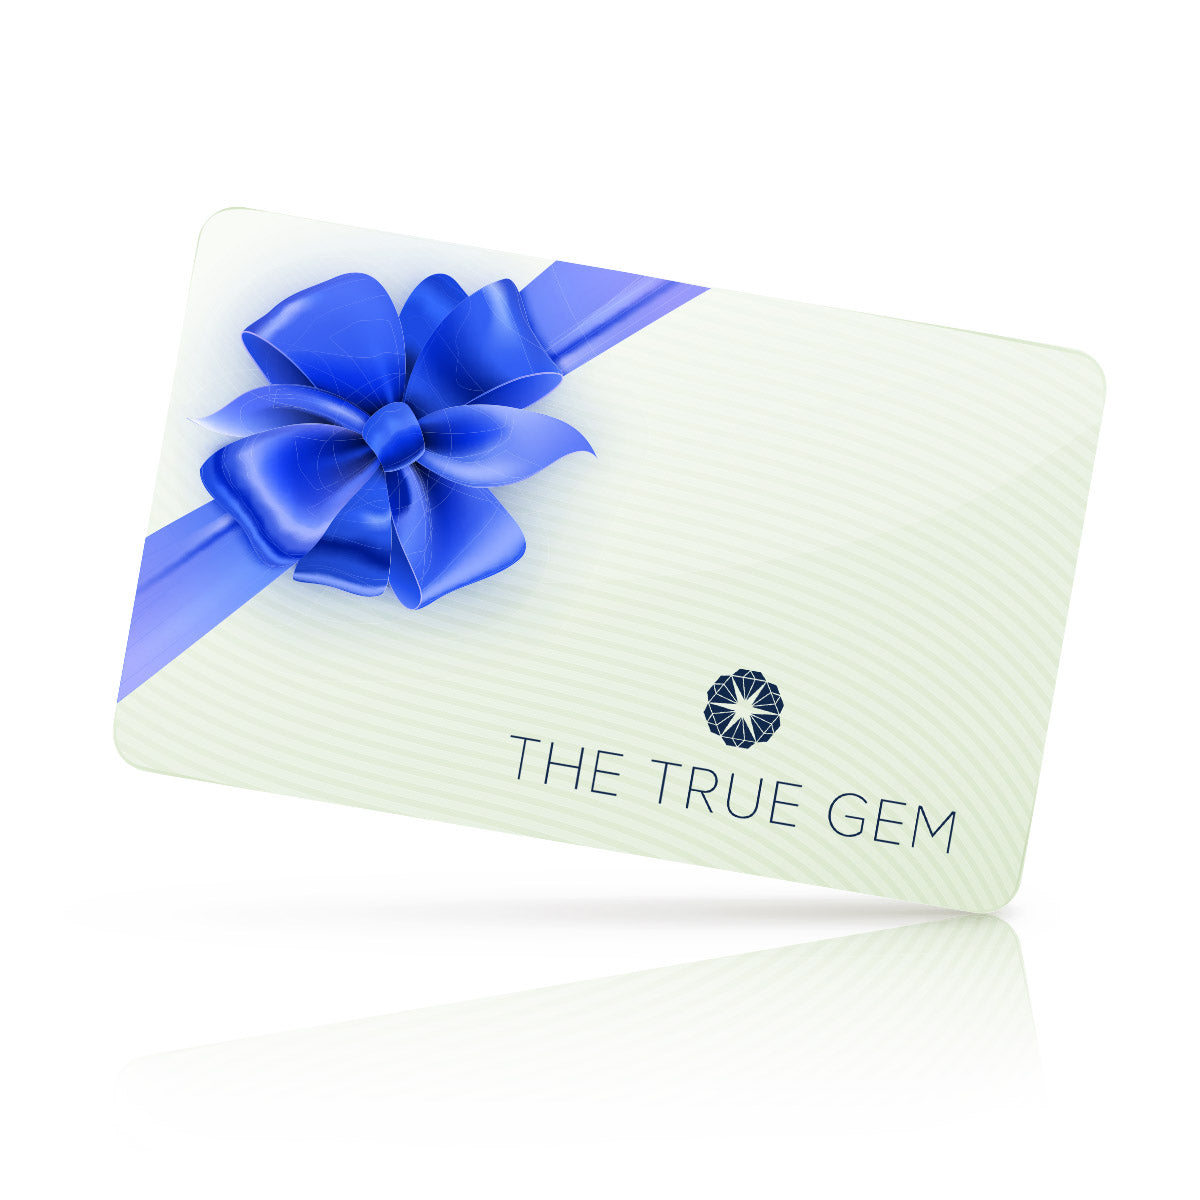 The True Gem Gift Card